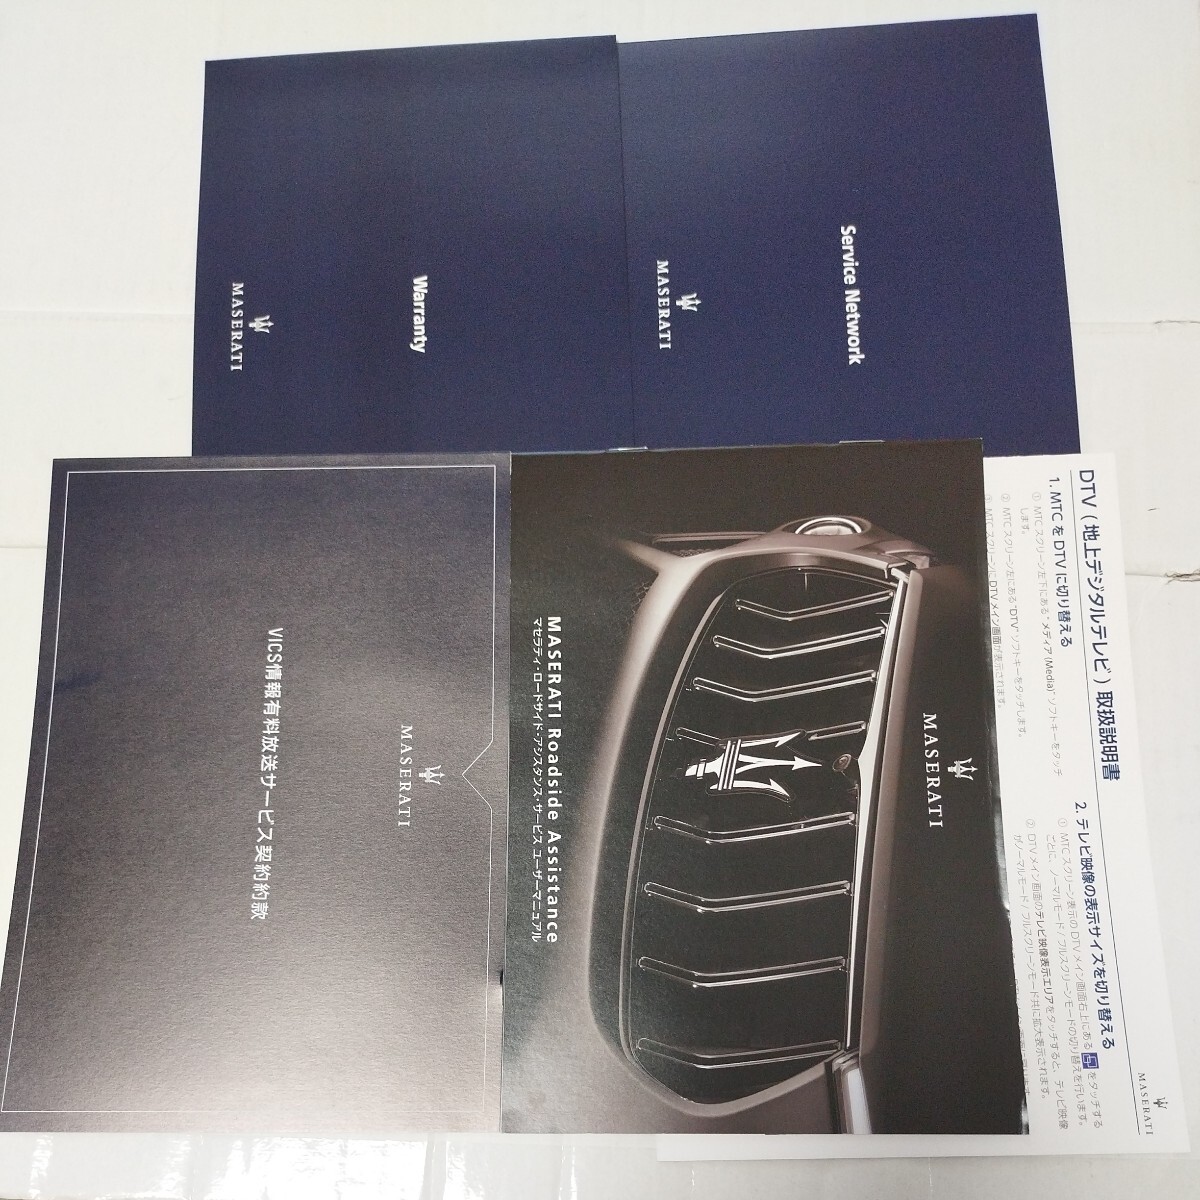  beautiful goods * Maserati original vehicle inspection certificate case vehicle inspection certificate inserting manual case book case cover 